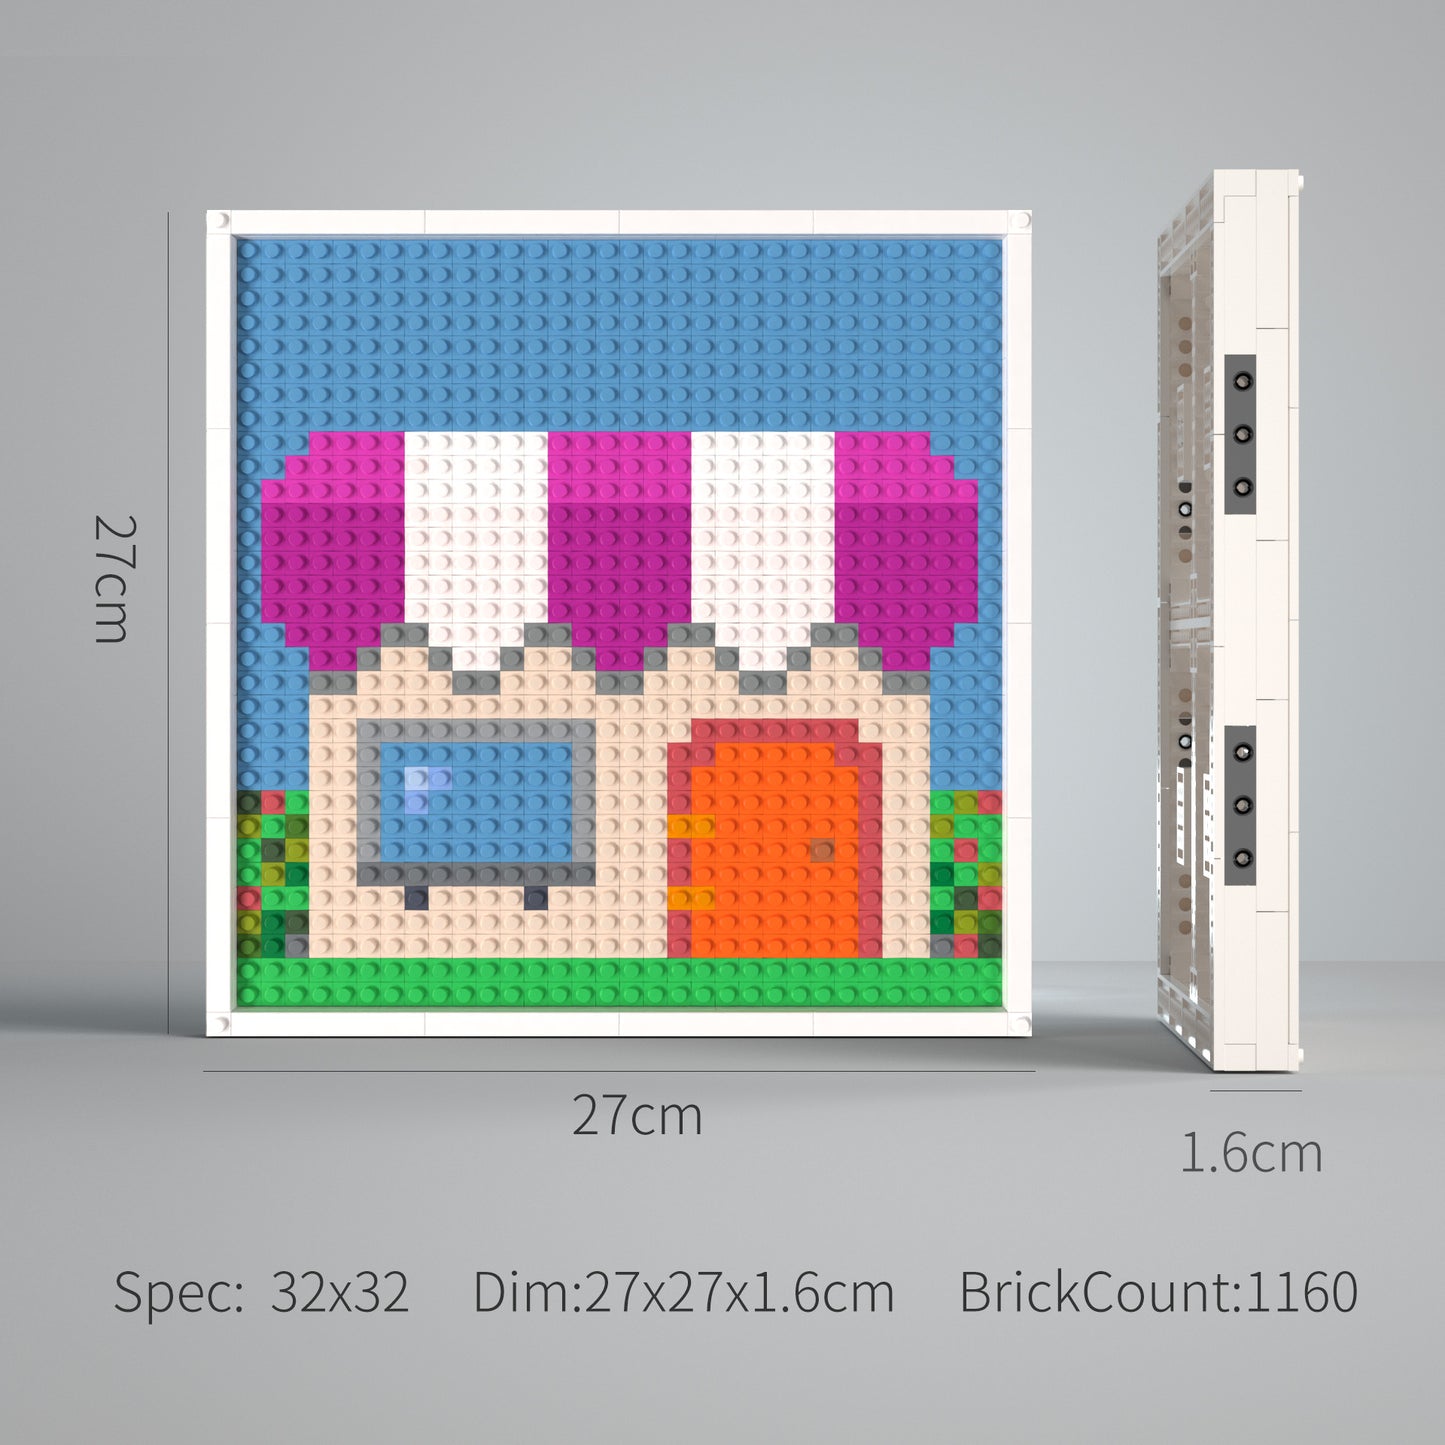 A Cartoon Romantic Little House Building Brick Pixel Art - 32*32 Modular Compatible with Lego